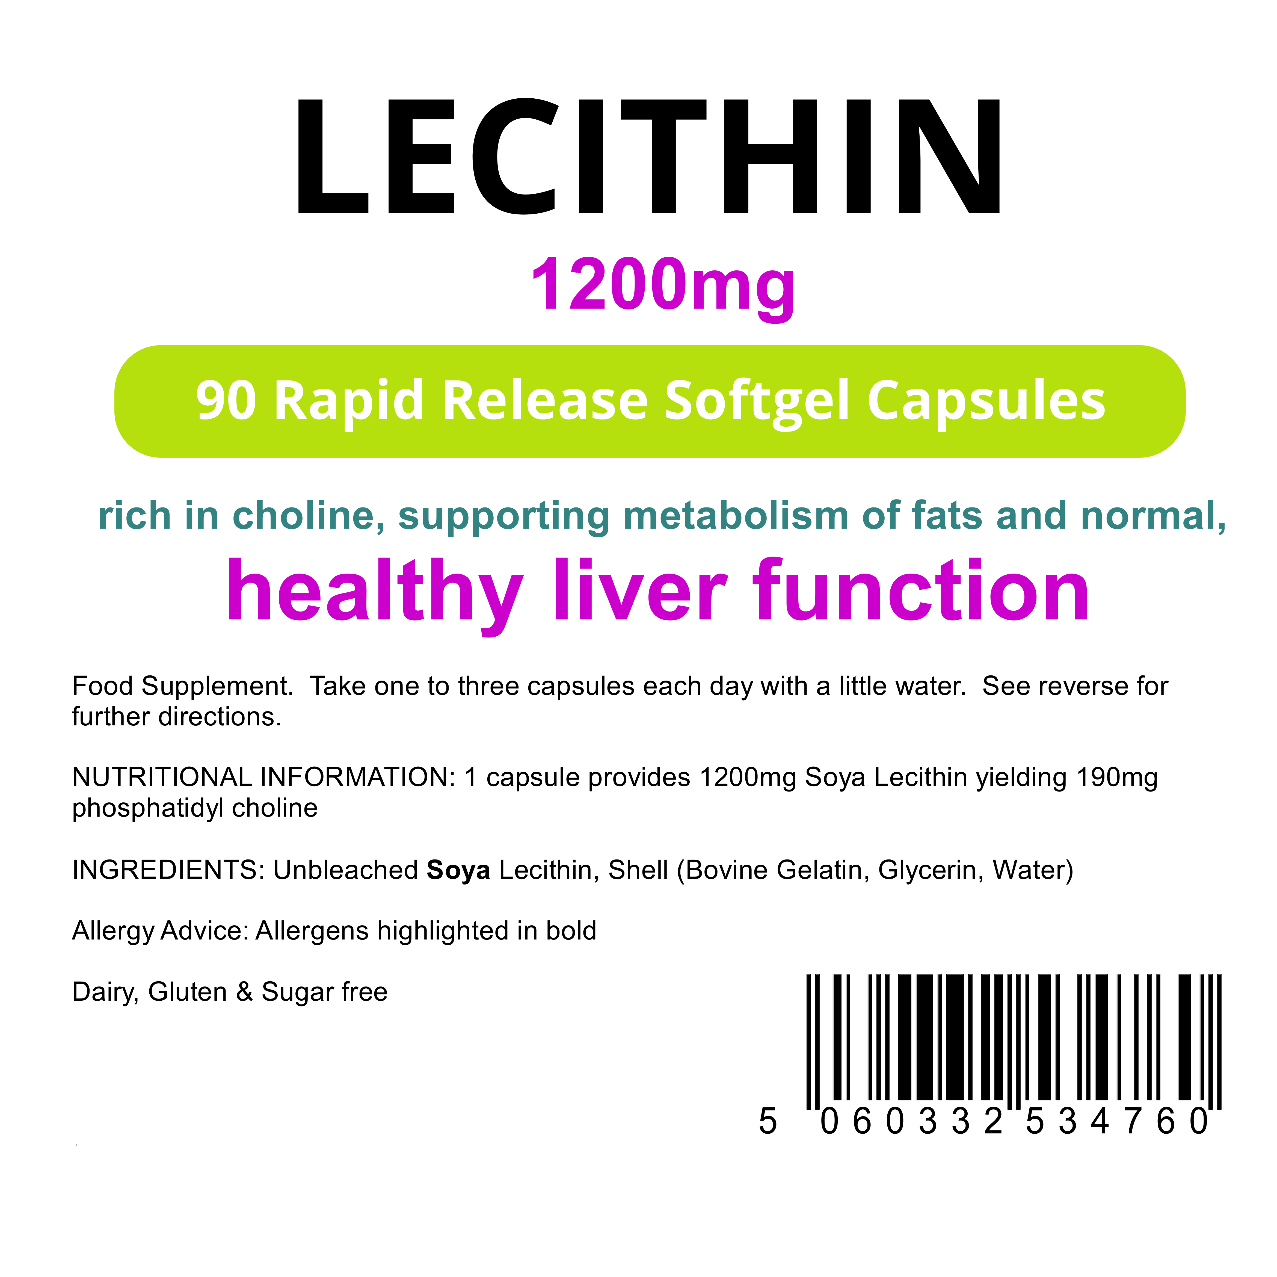 Lecithin function